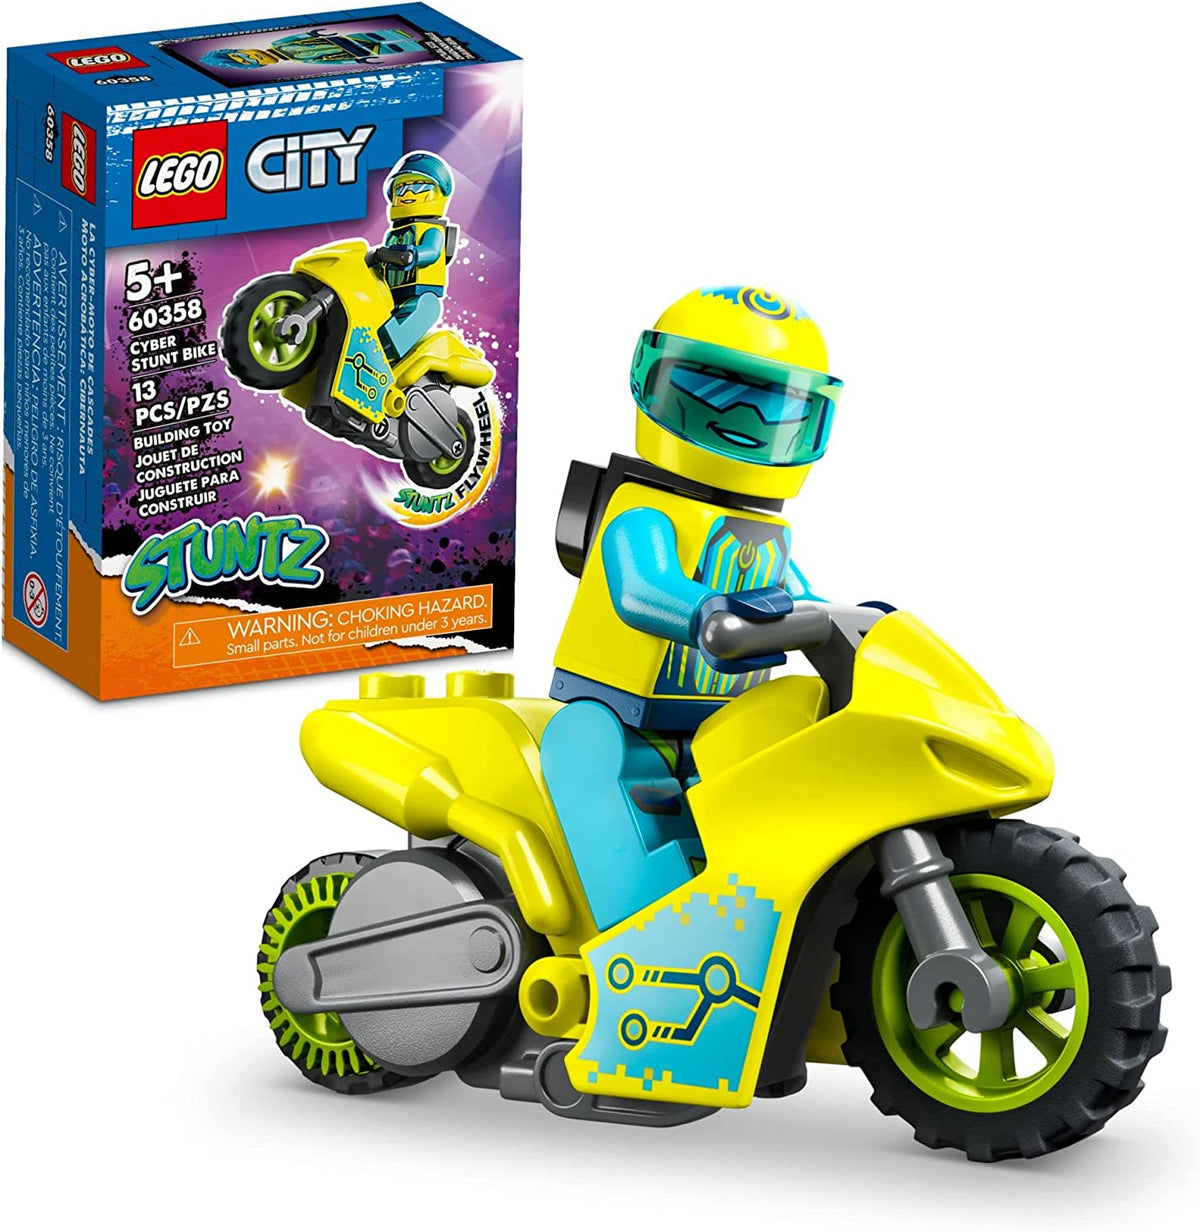 CITY 60358: Cyber Stunt Bike